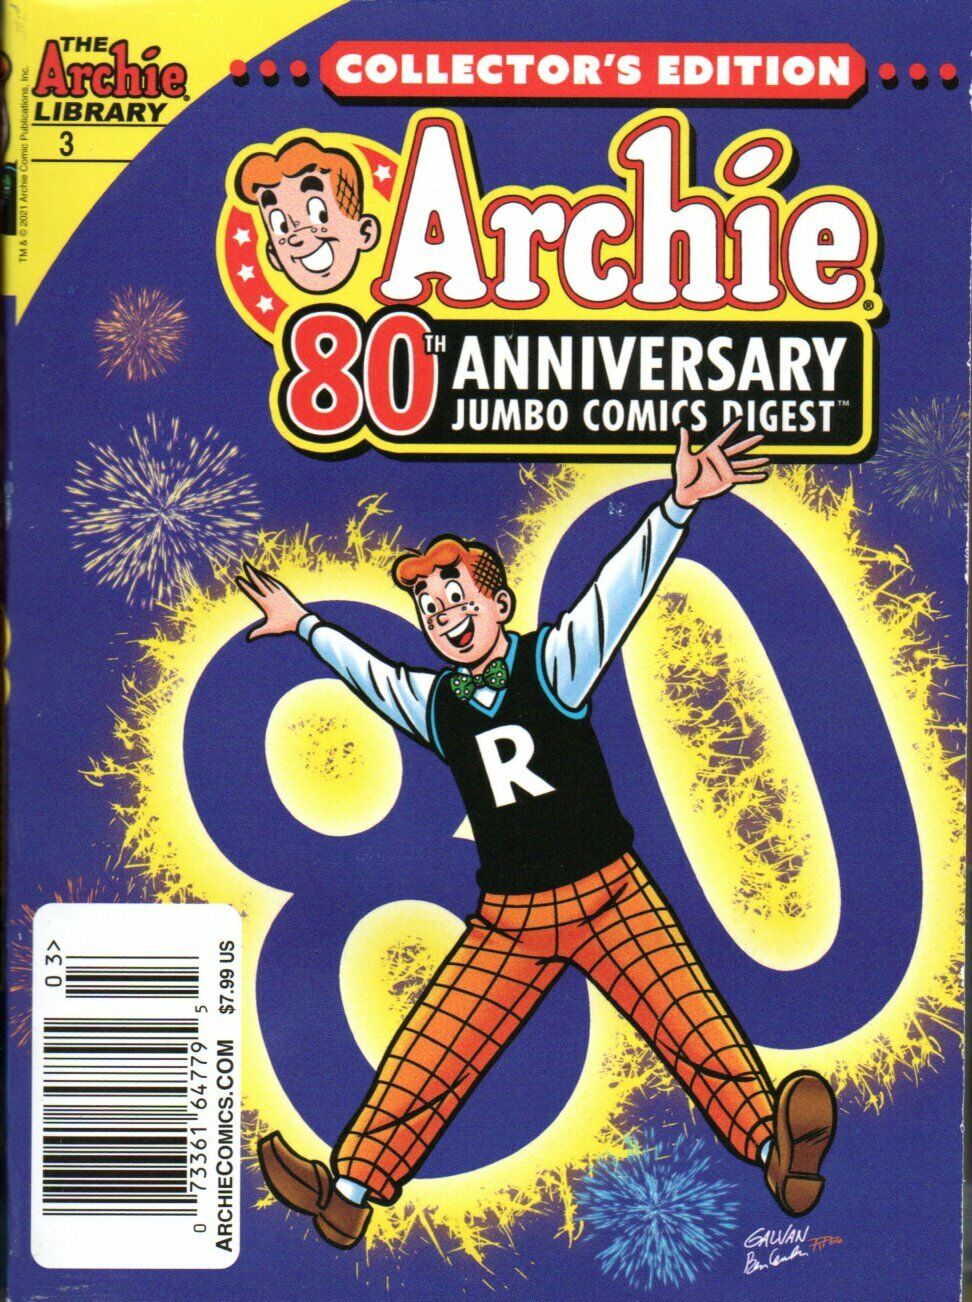 ARCHIE 80TH ANNIVERSARY JUMBO COMICS DIGEST No. 3 August 2021 Comic Book 